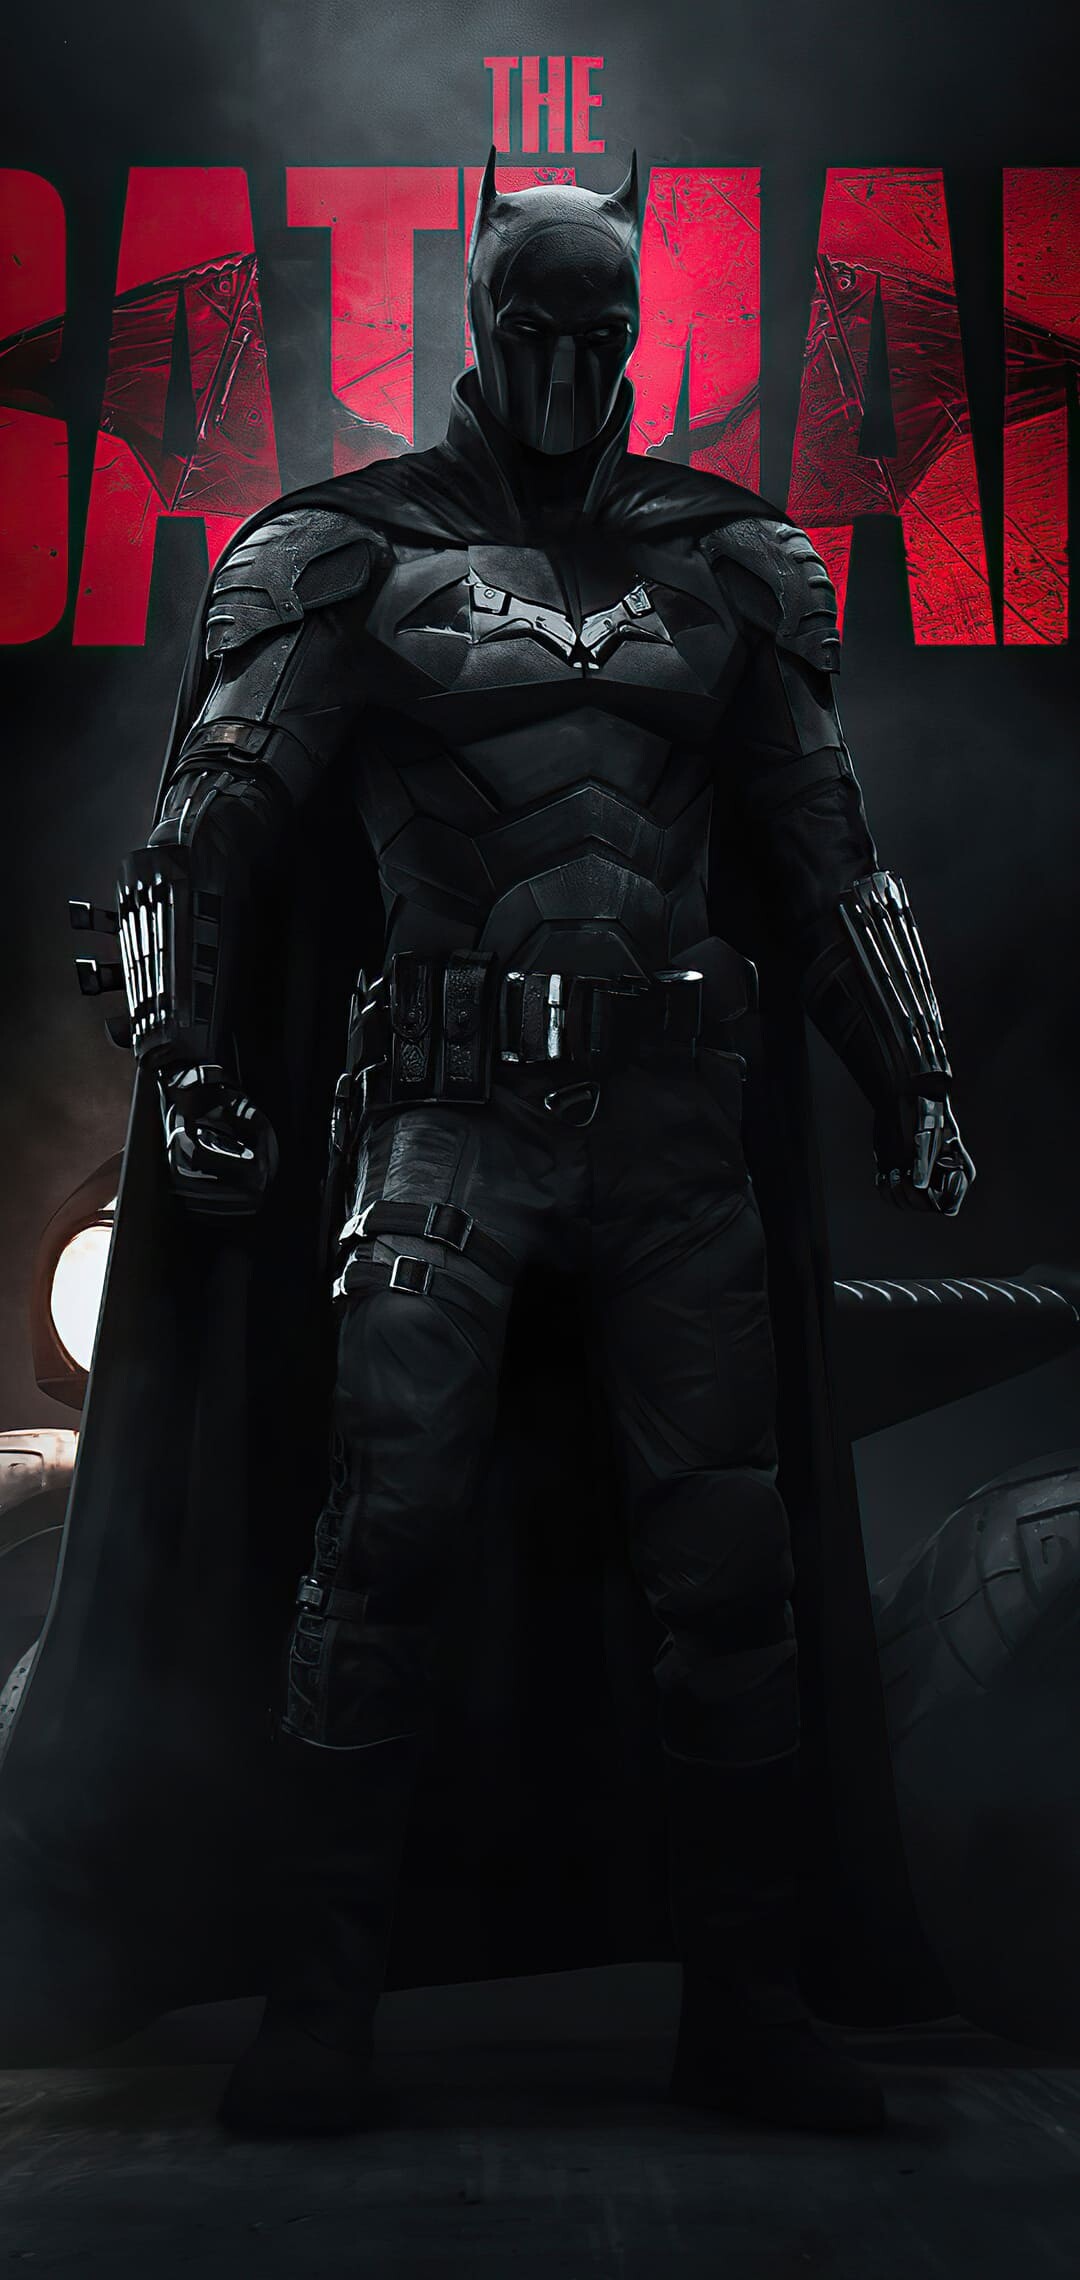 The Batman (2022): The highest-grossing serial killer film, Movie, Robert Pattinson. 1080x2280 HD Wallpaper.